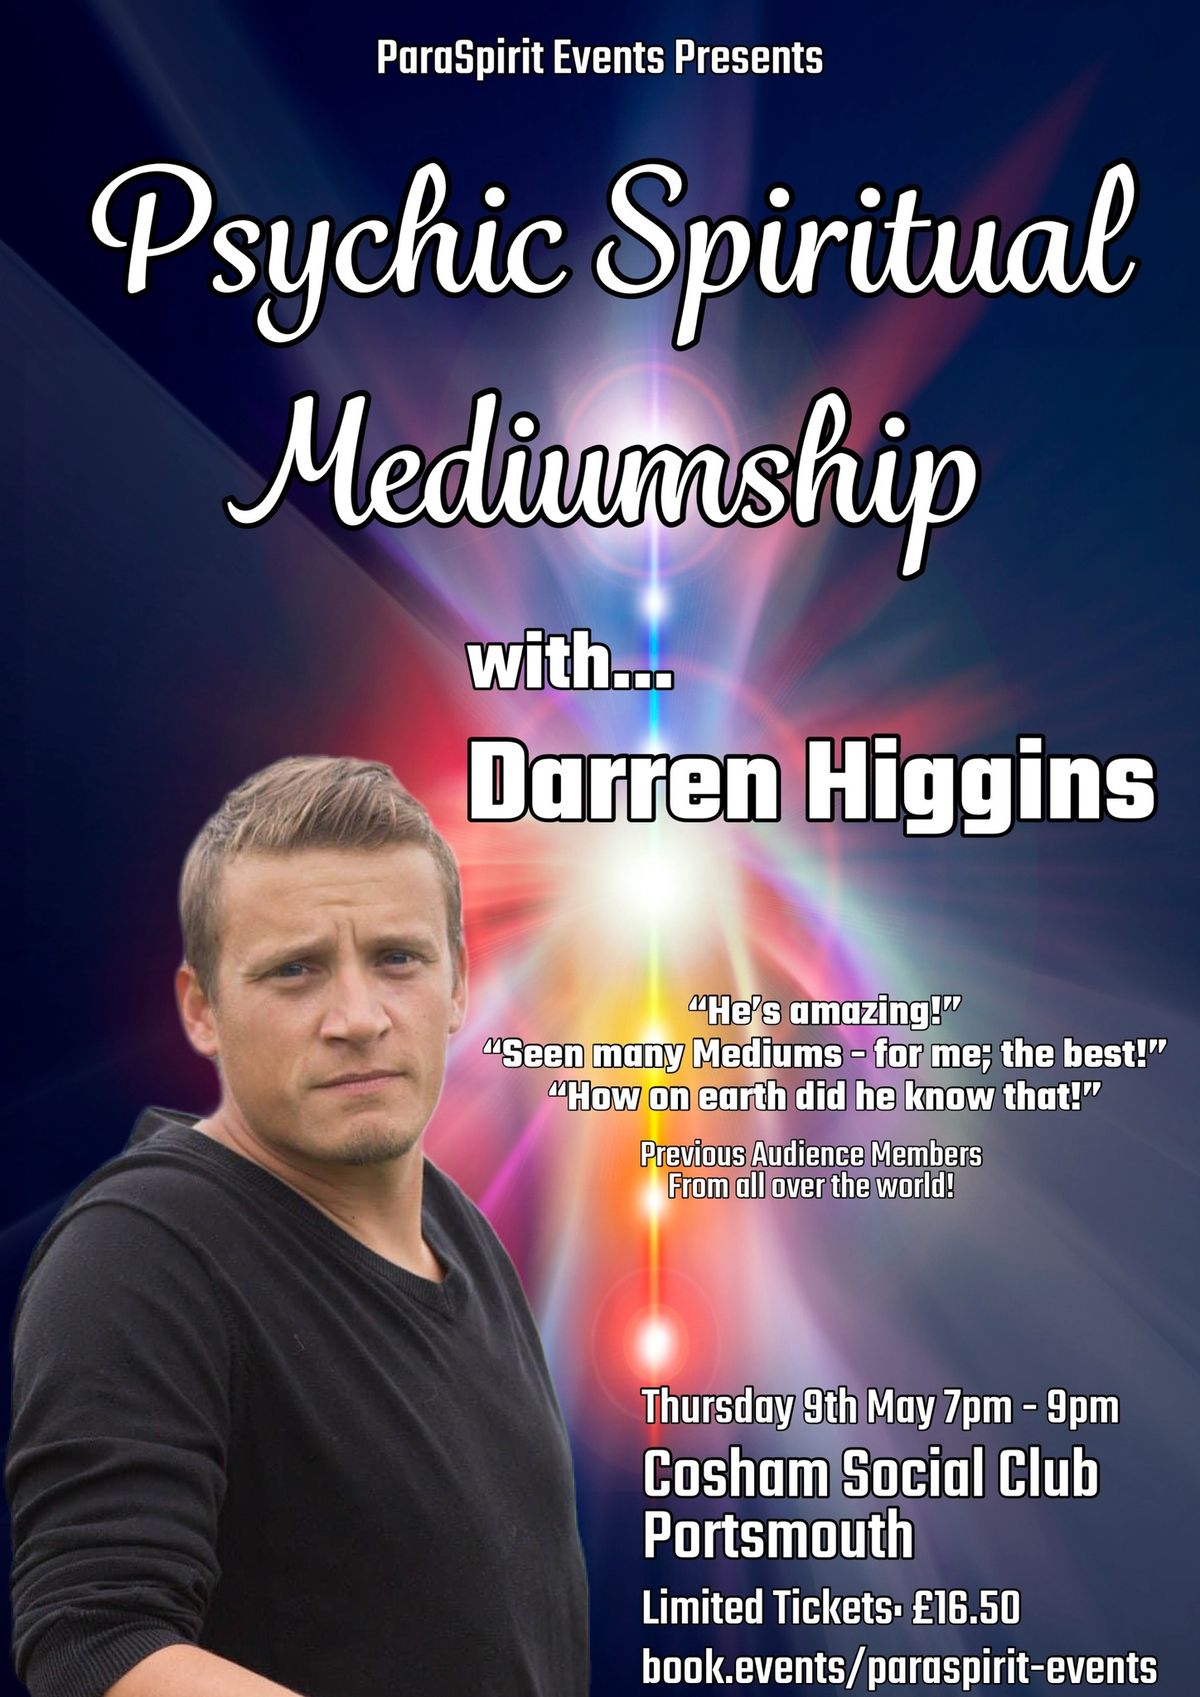 Cosham Social Club, Portsmouth - Psychic Spiritual Mediumship with Darren Higgins